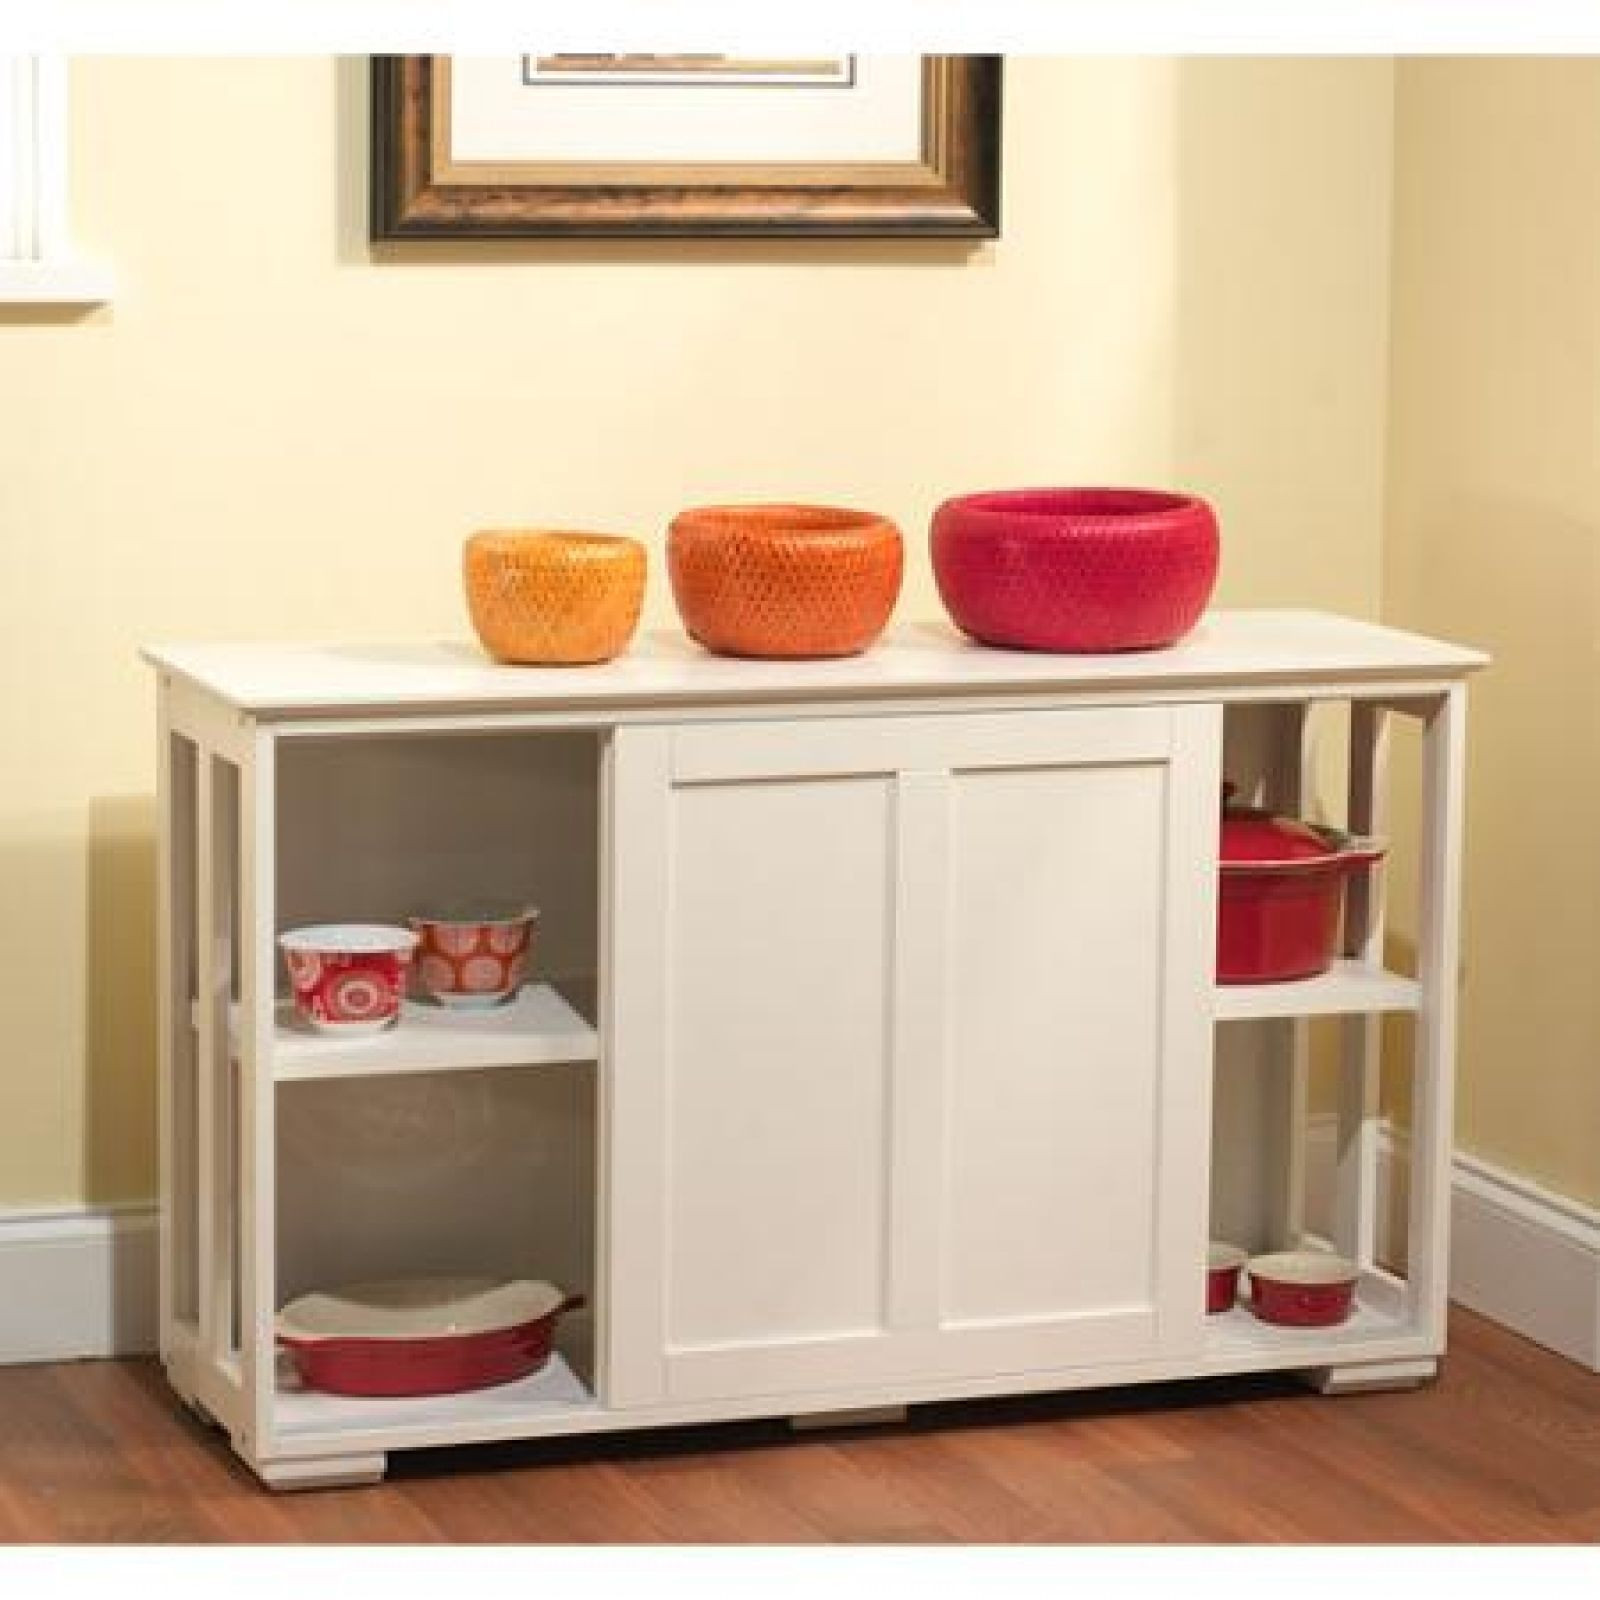 Best ideas about Storage Cabinet For Kitchen
. Save or Pin White Kitchen Storage Cabinet Stackable Sliding Door Wood Now.